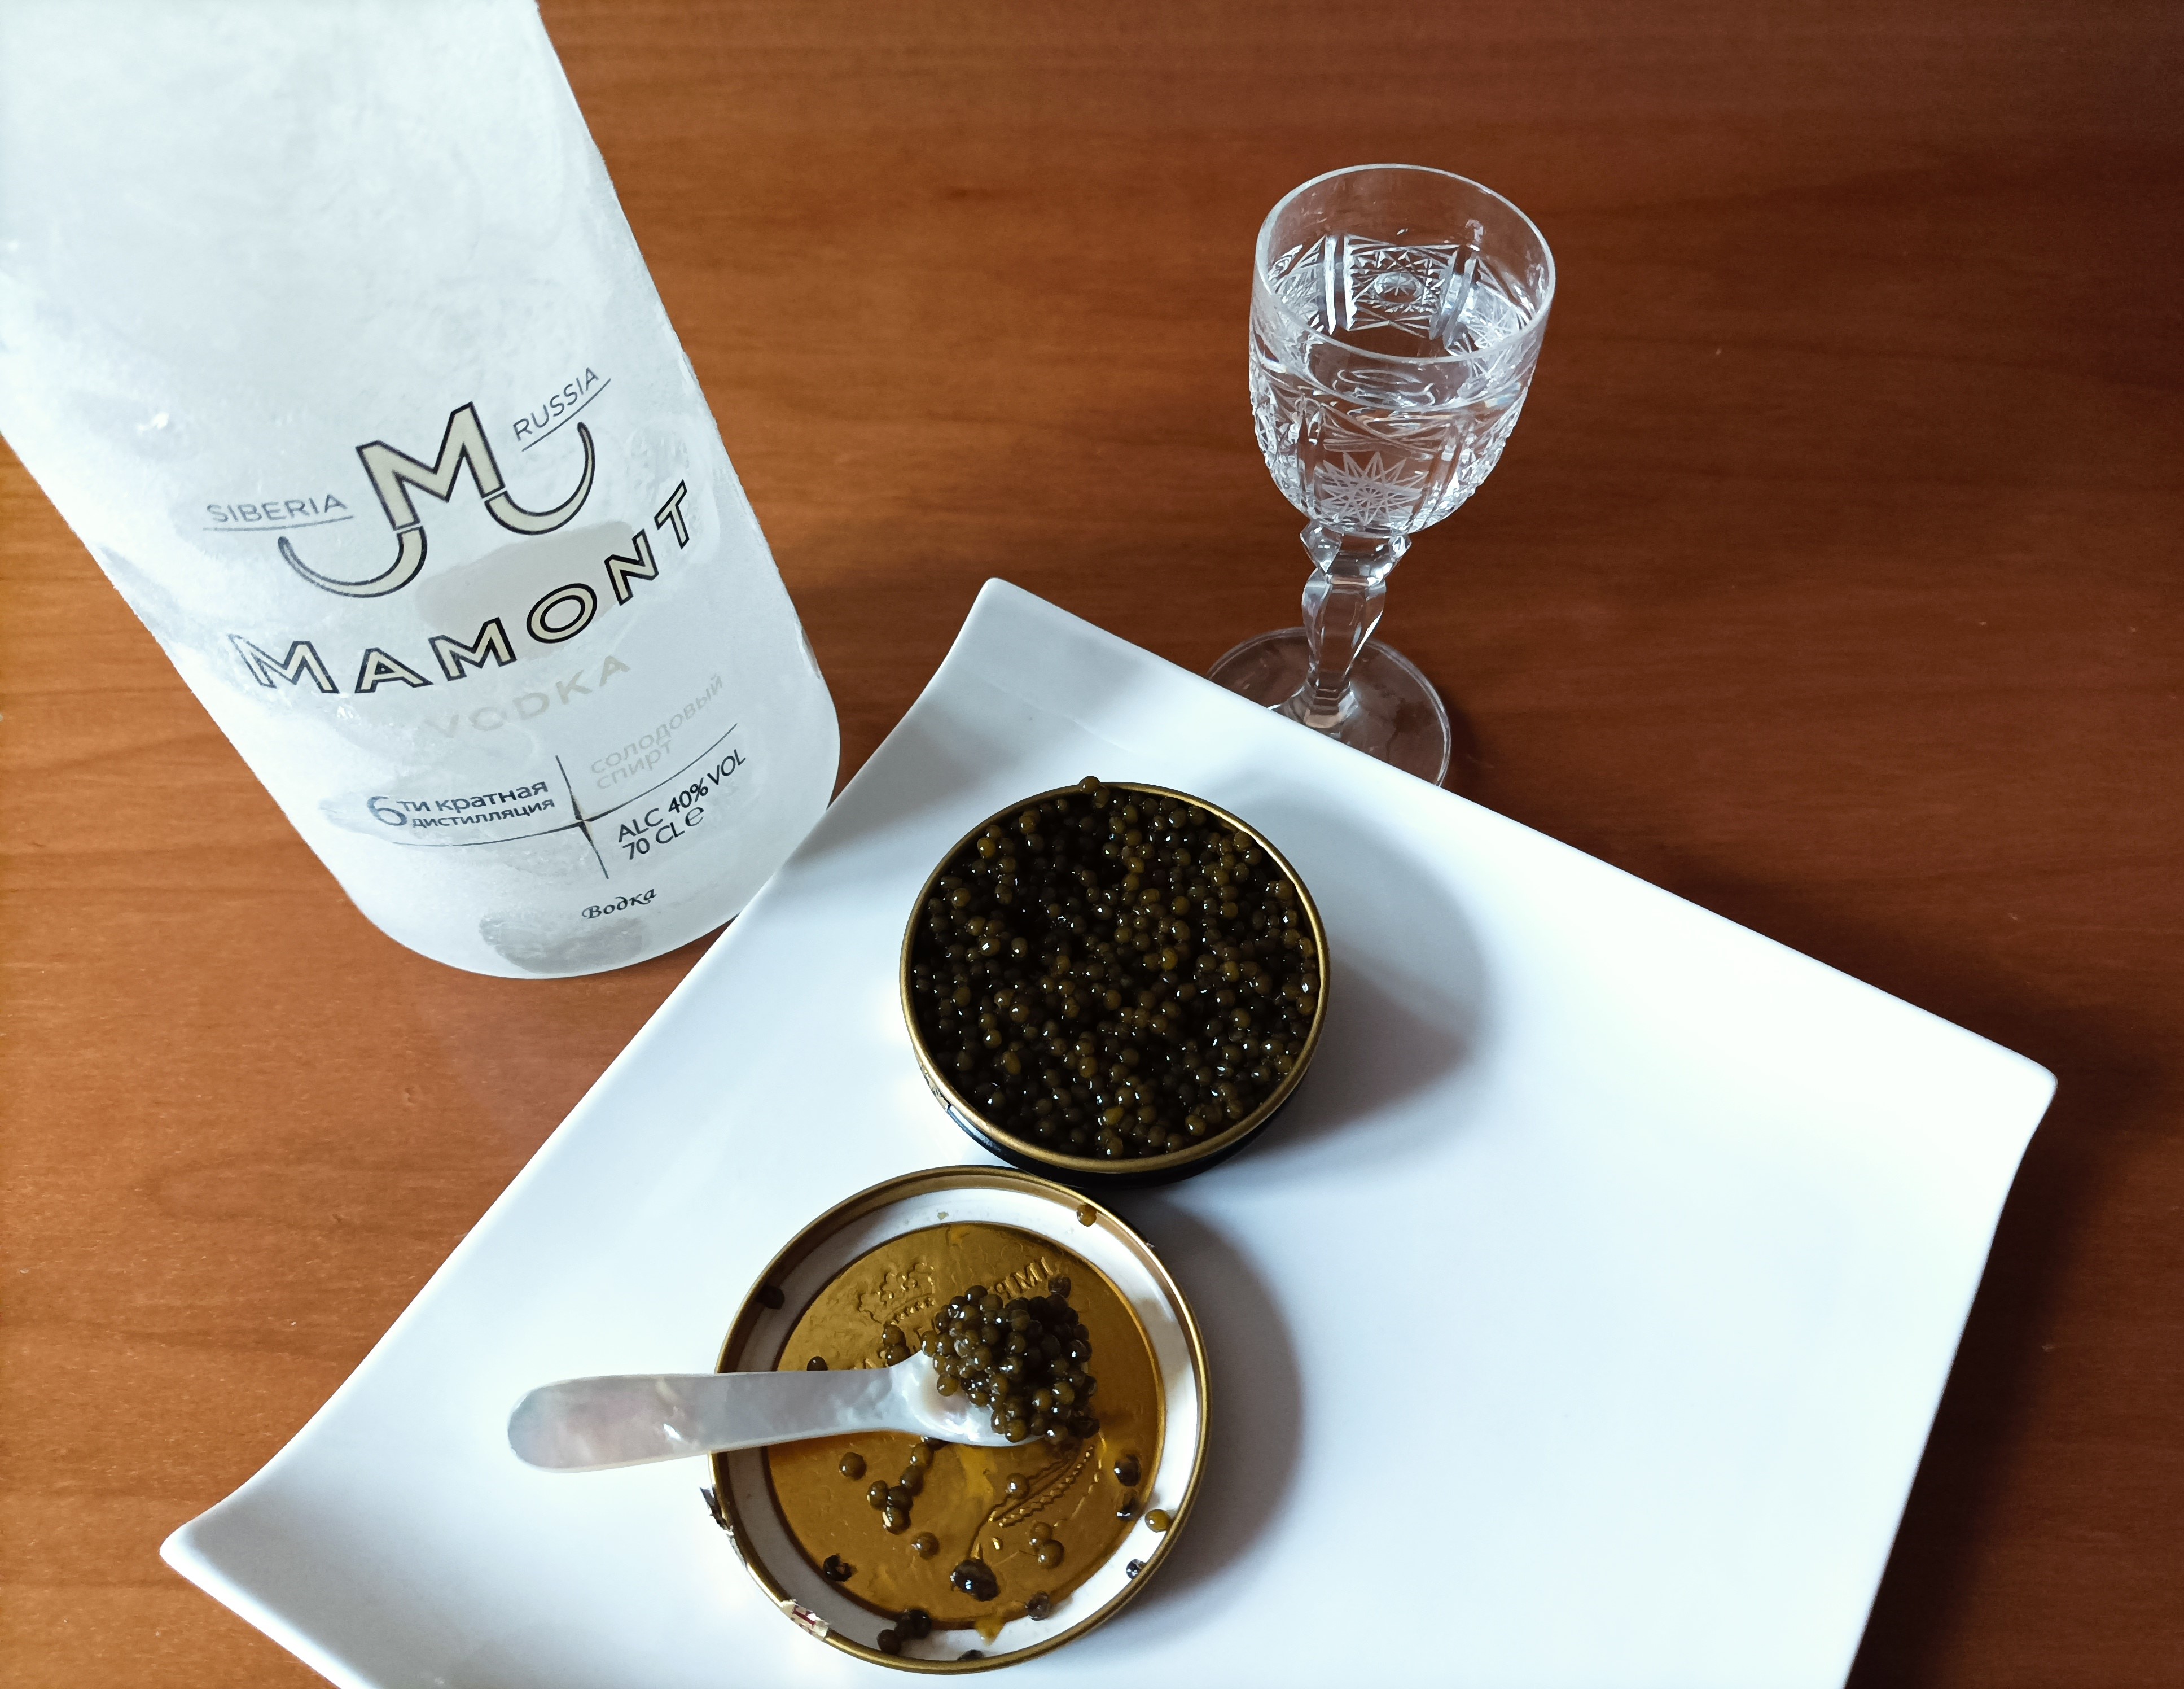 Caviar + Vodka Mamont